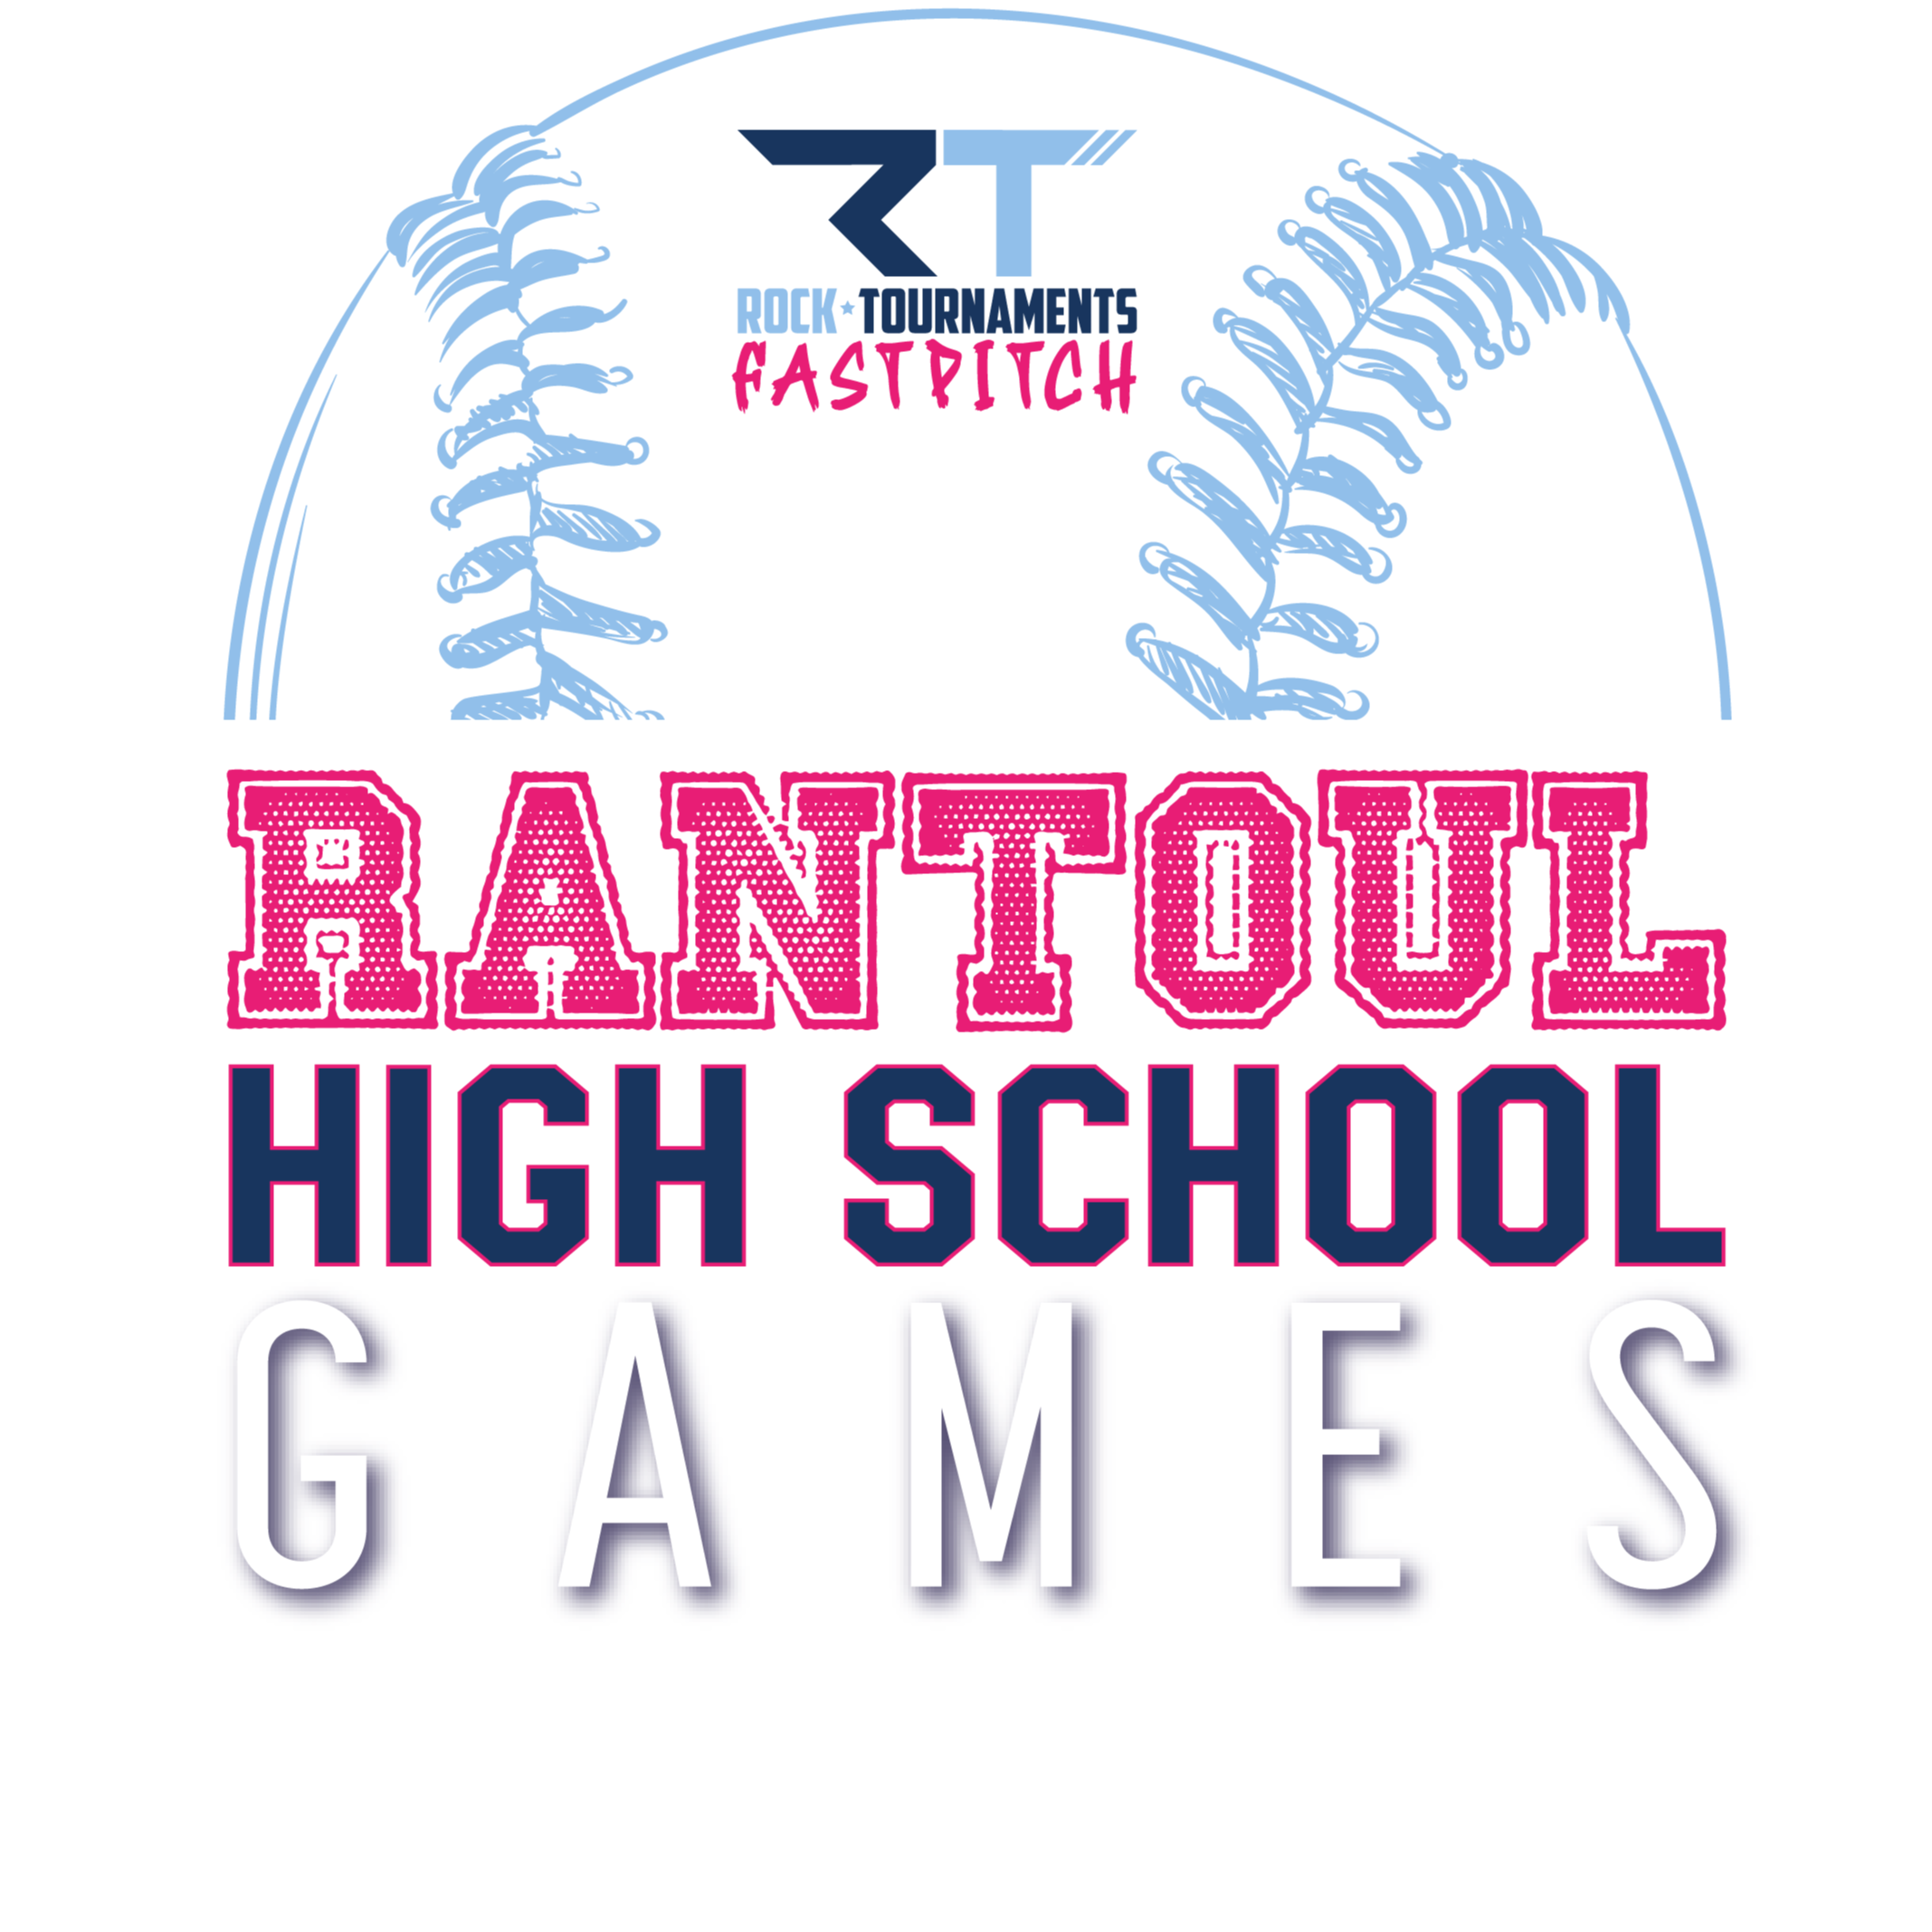 Rantoul High School Games Fastpitch 07/30/2022 07/31/2022 The